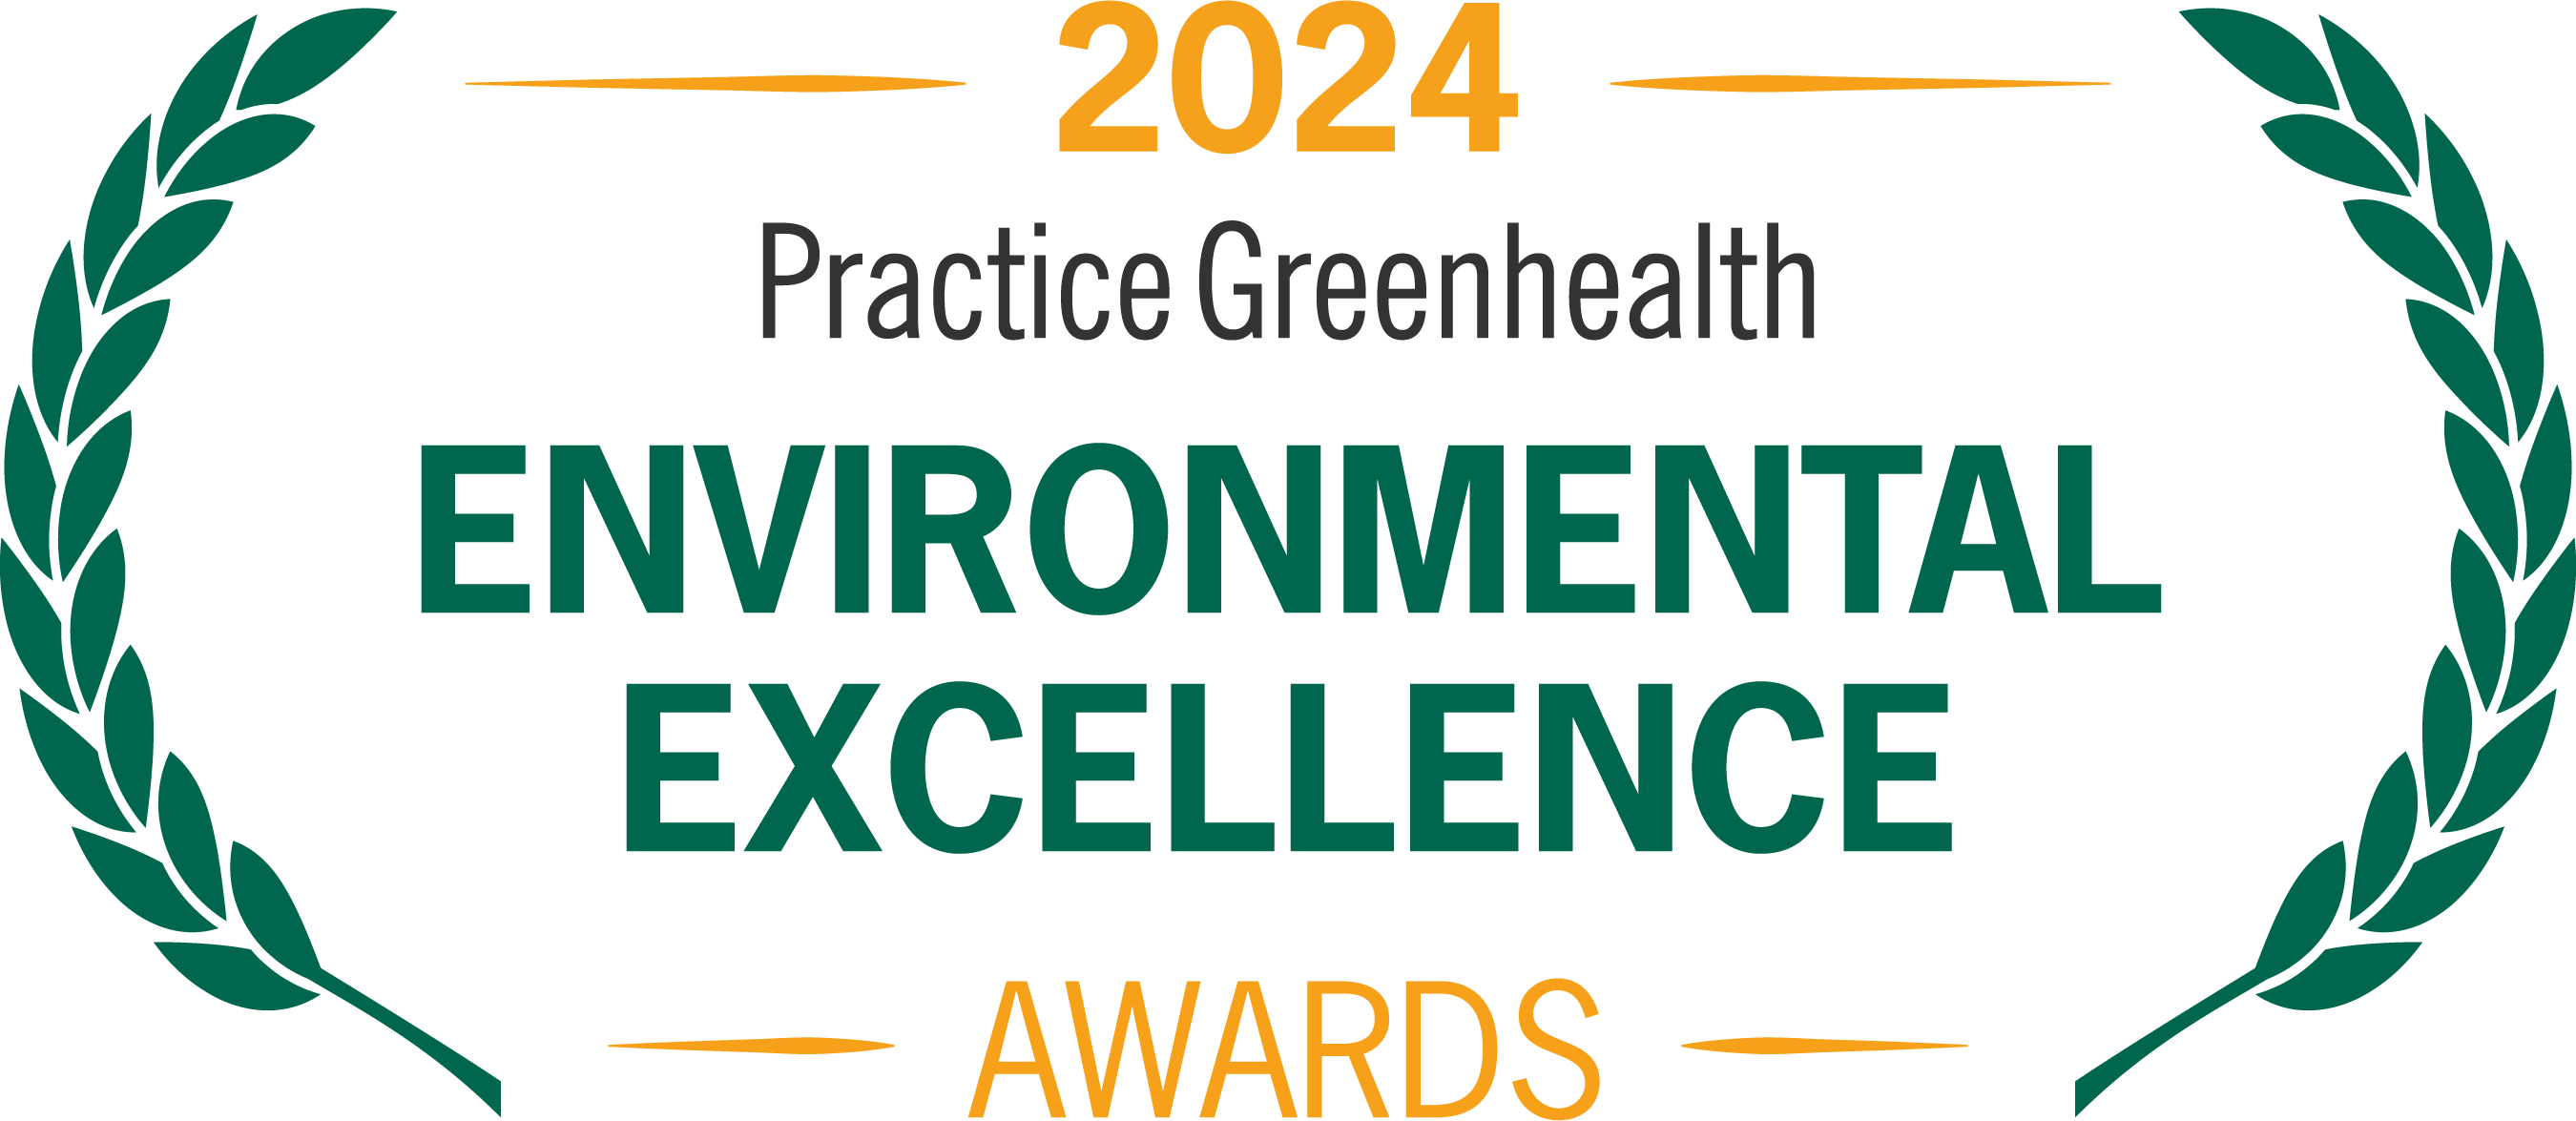 Practice Greenhealth Environmental Excellence Awards Logo